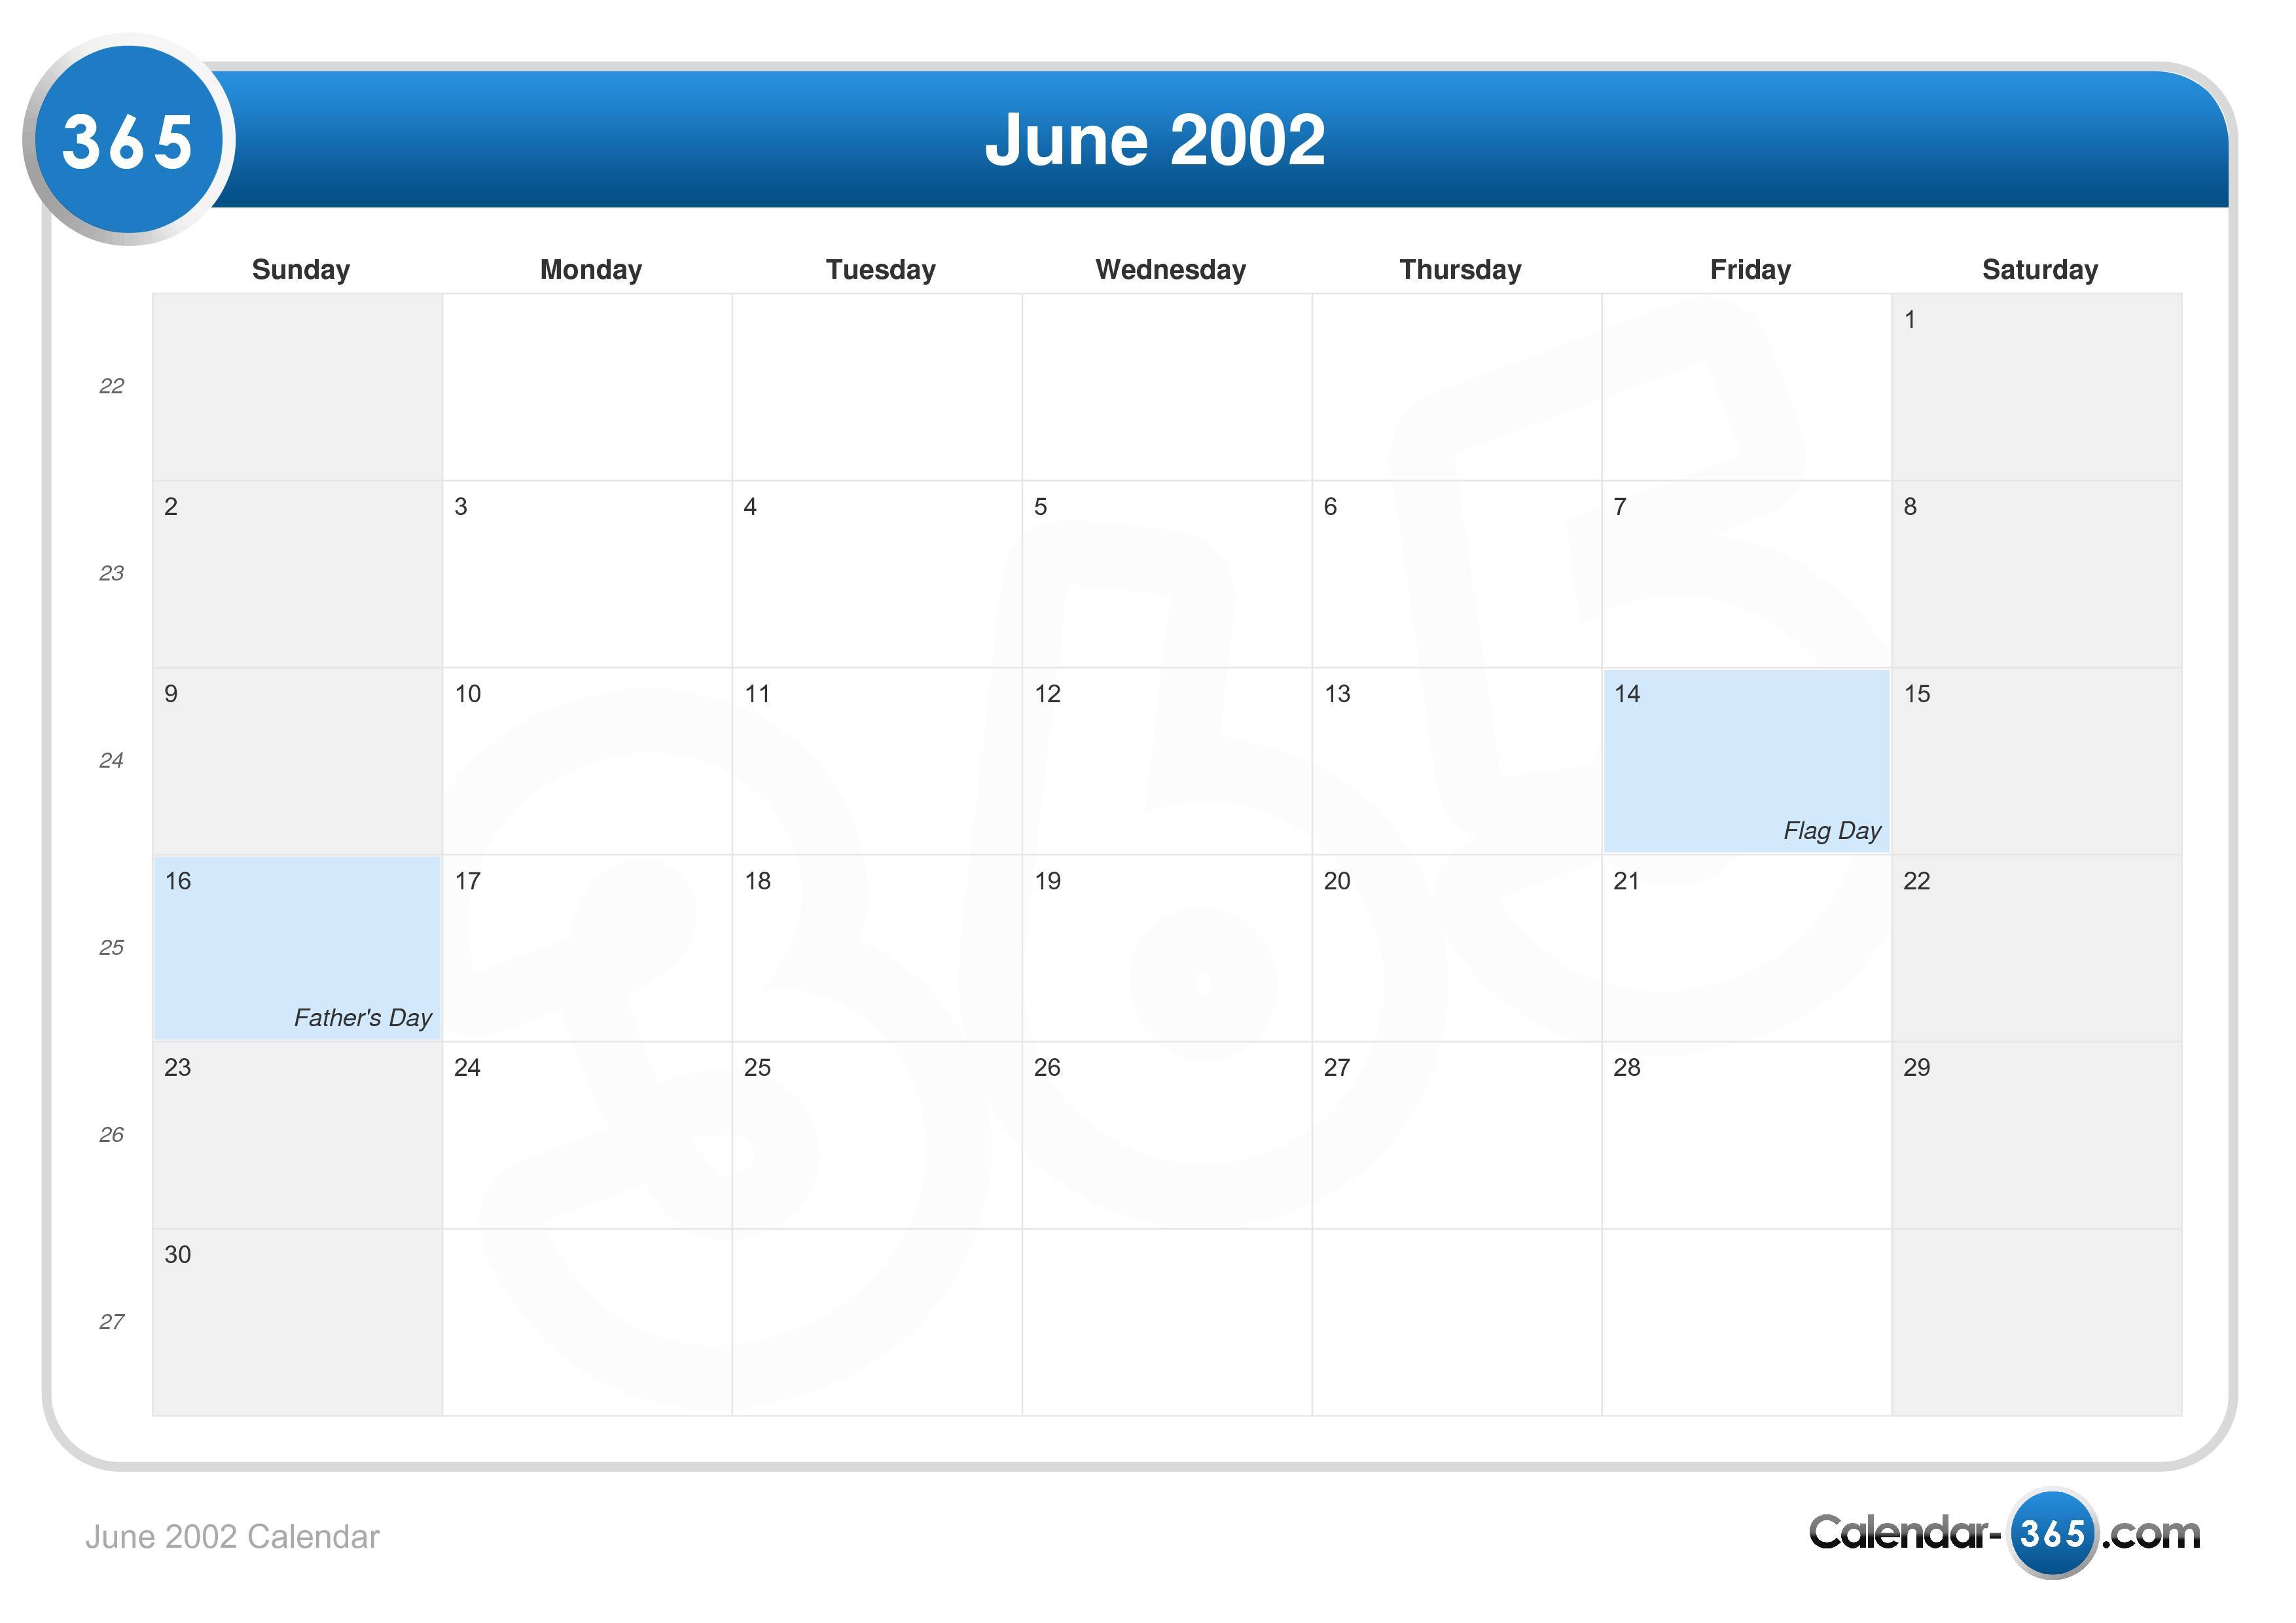 June 2002 Calendar